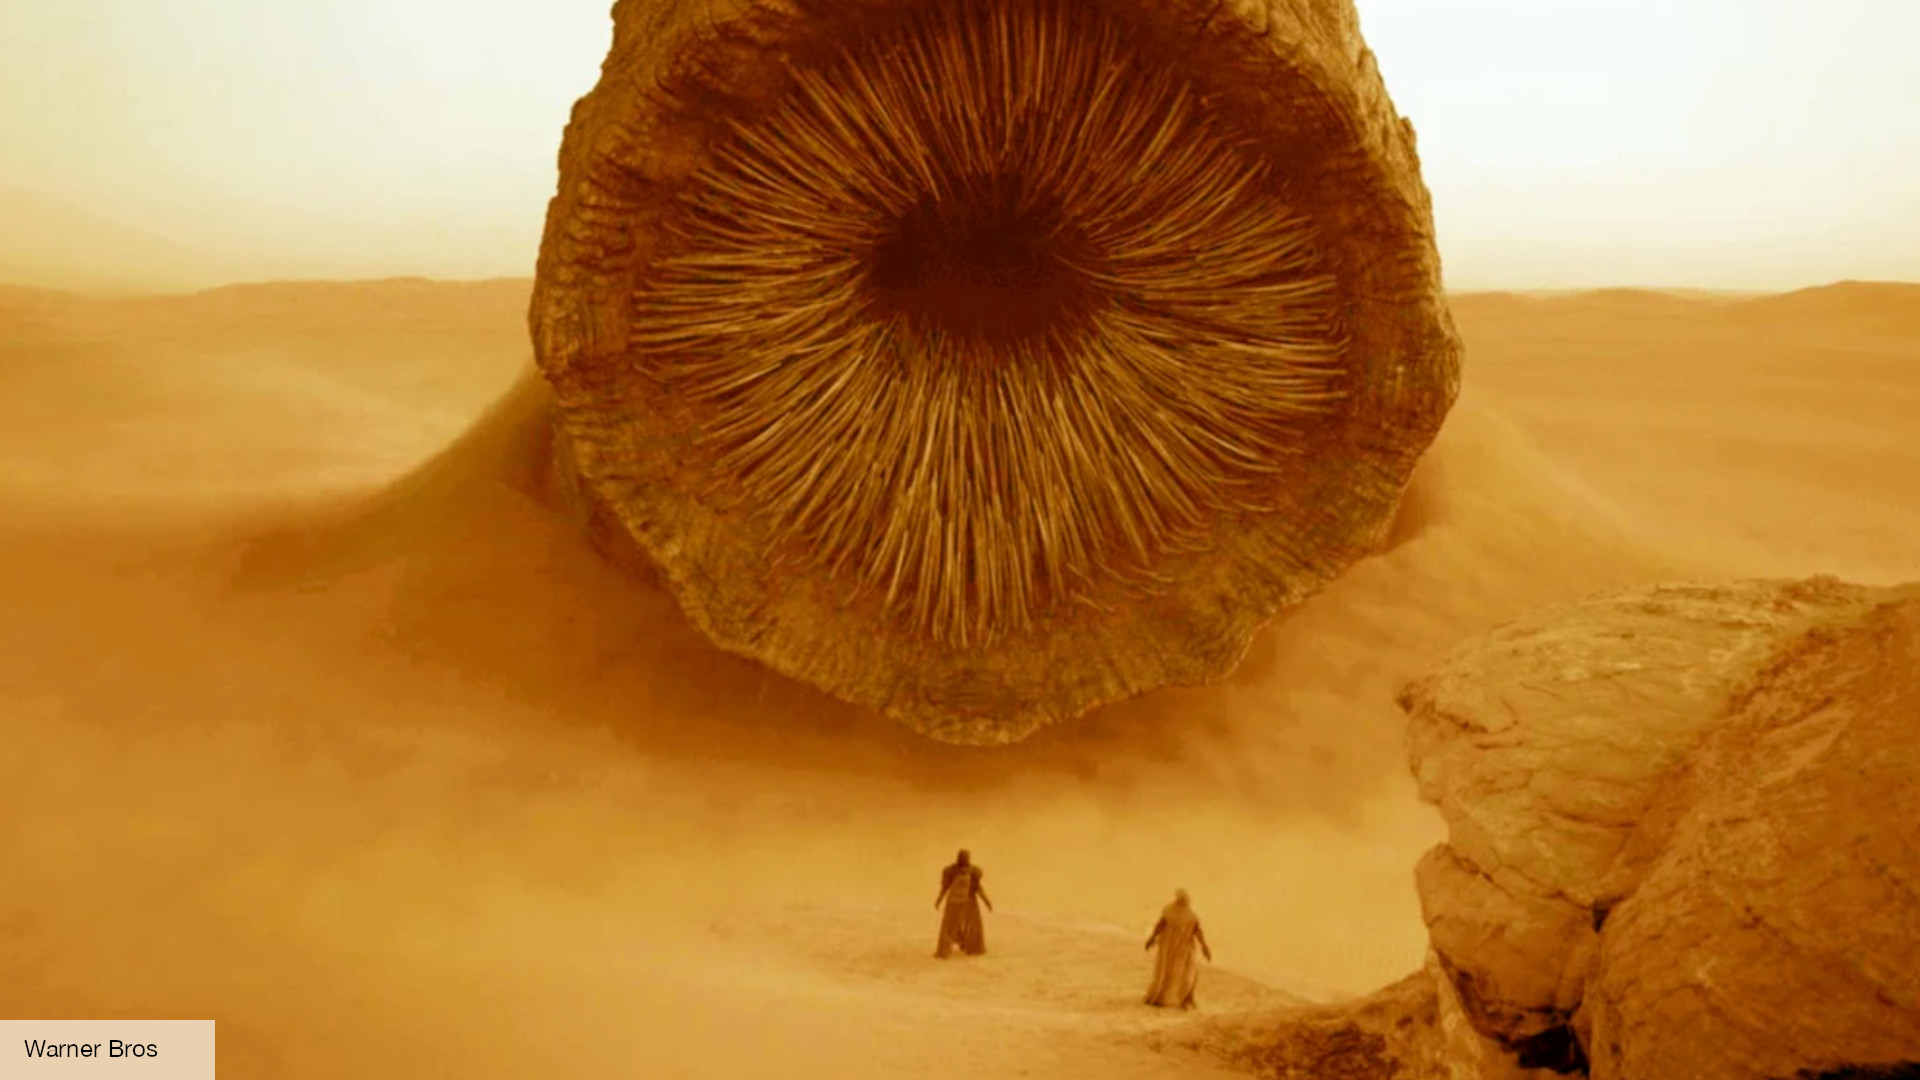 Denis Villeneuve wanted the “driest sound possible” for Dune's sandworms |  The Digital Fix